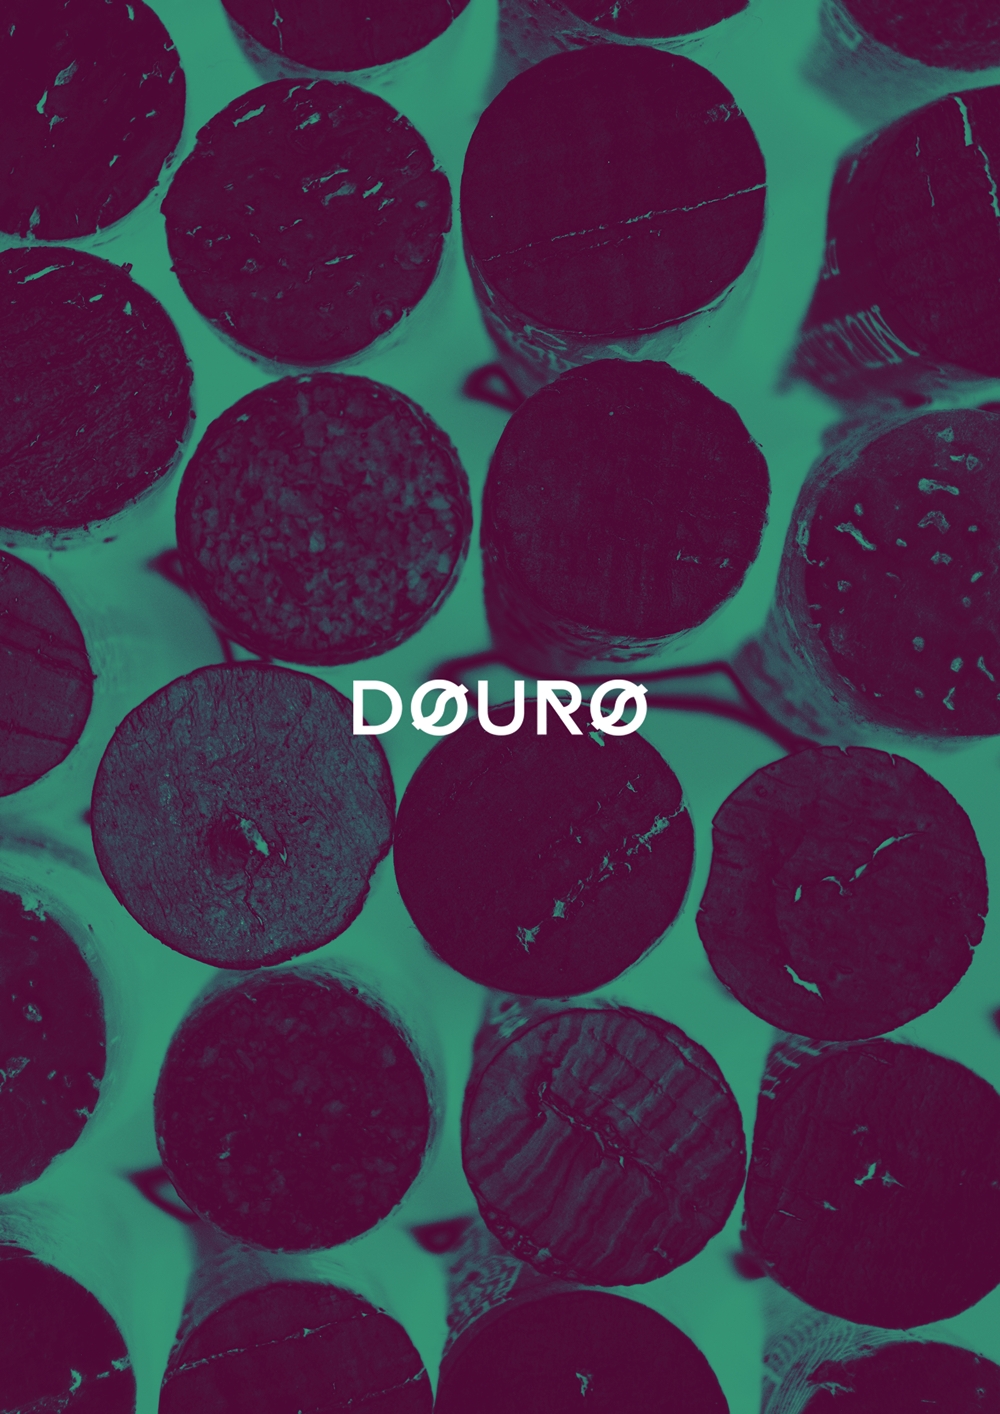 Douro Portugal identidade identity logo typo tipografia poster card campanha campaign texture pattern postal gif